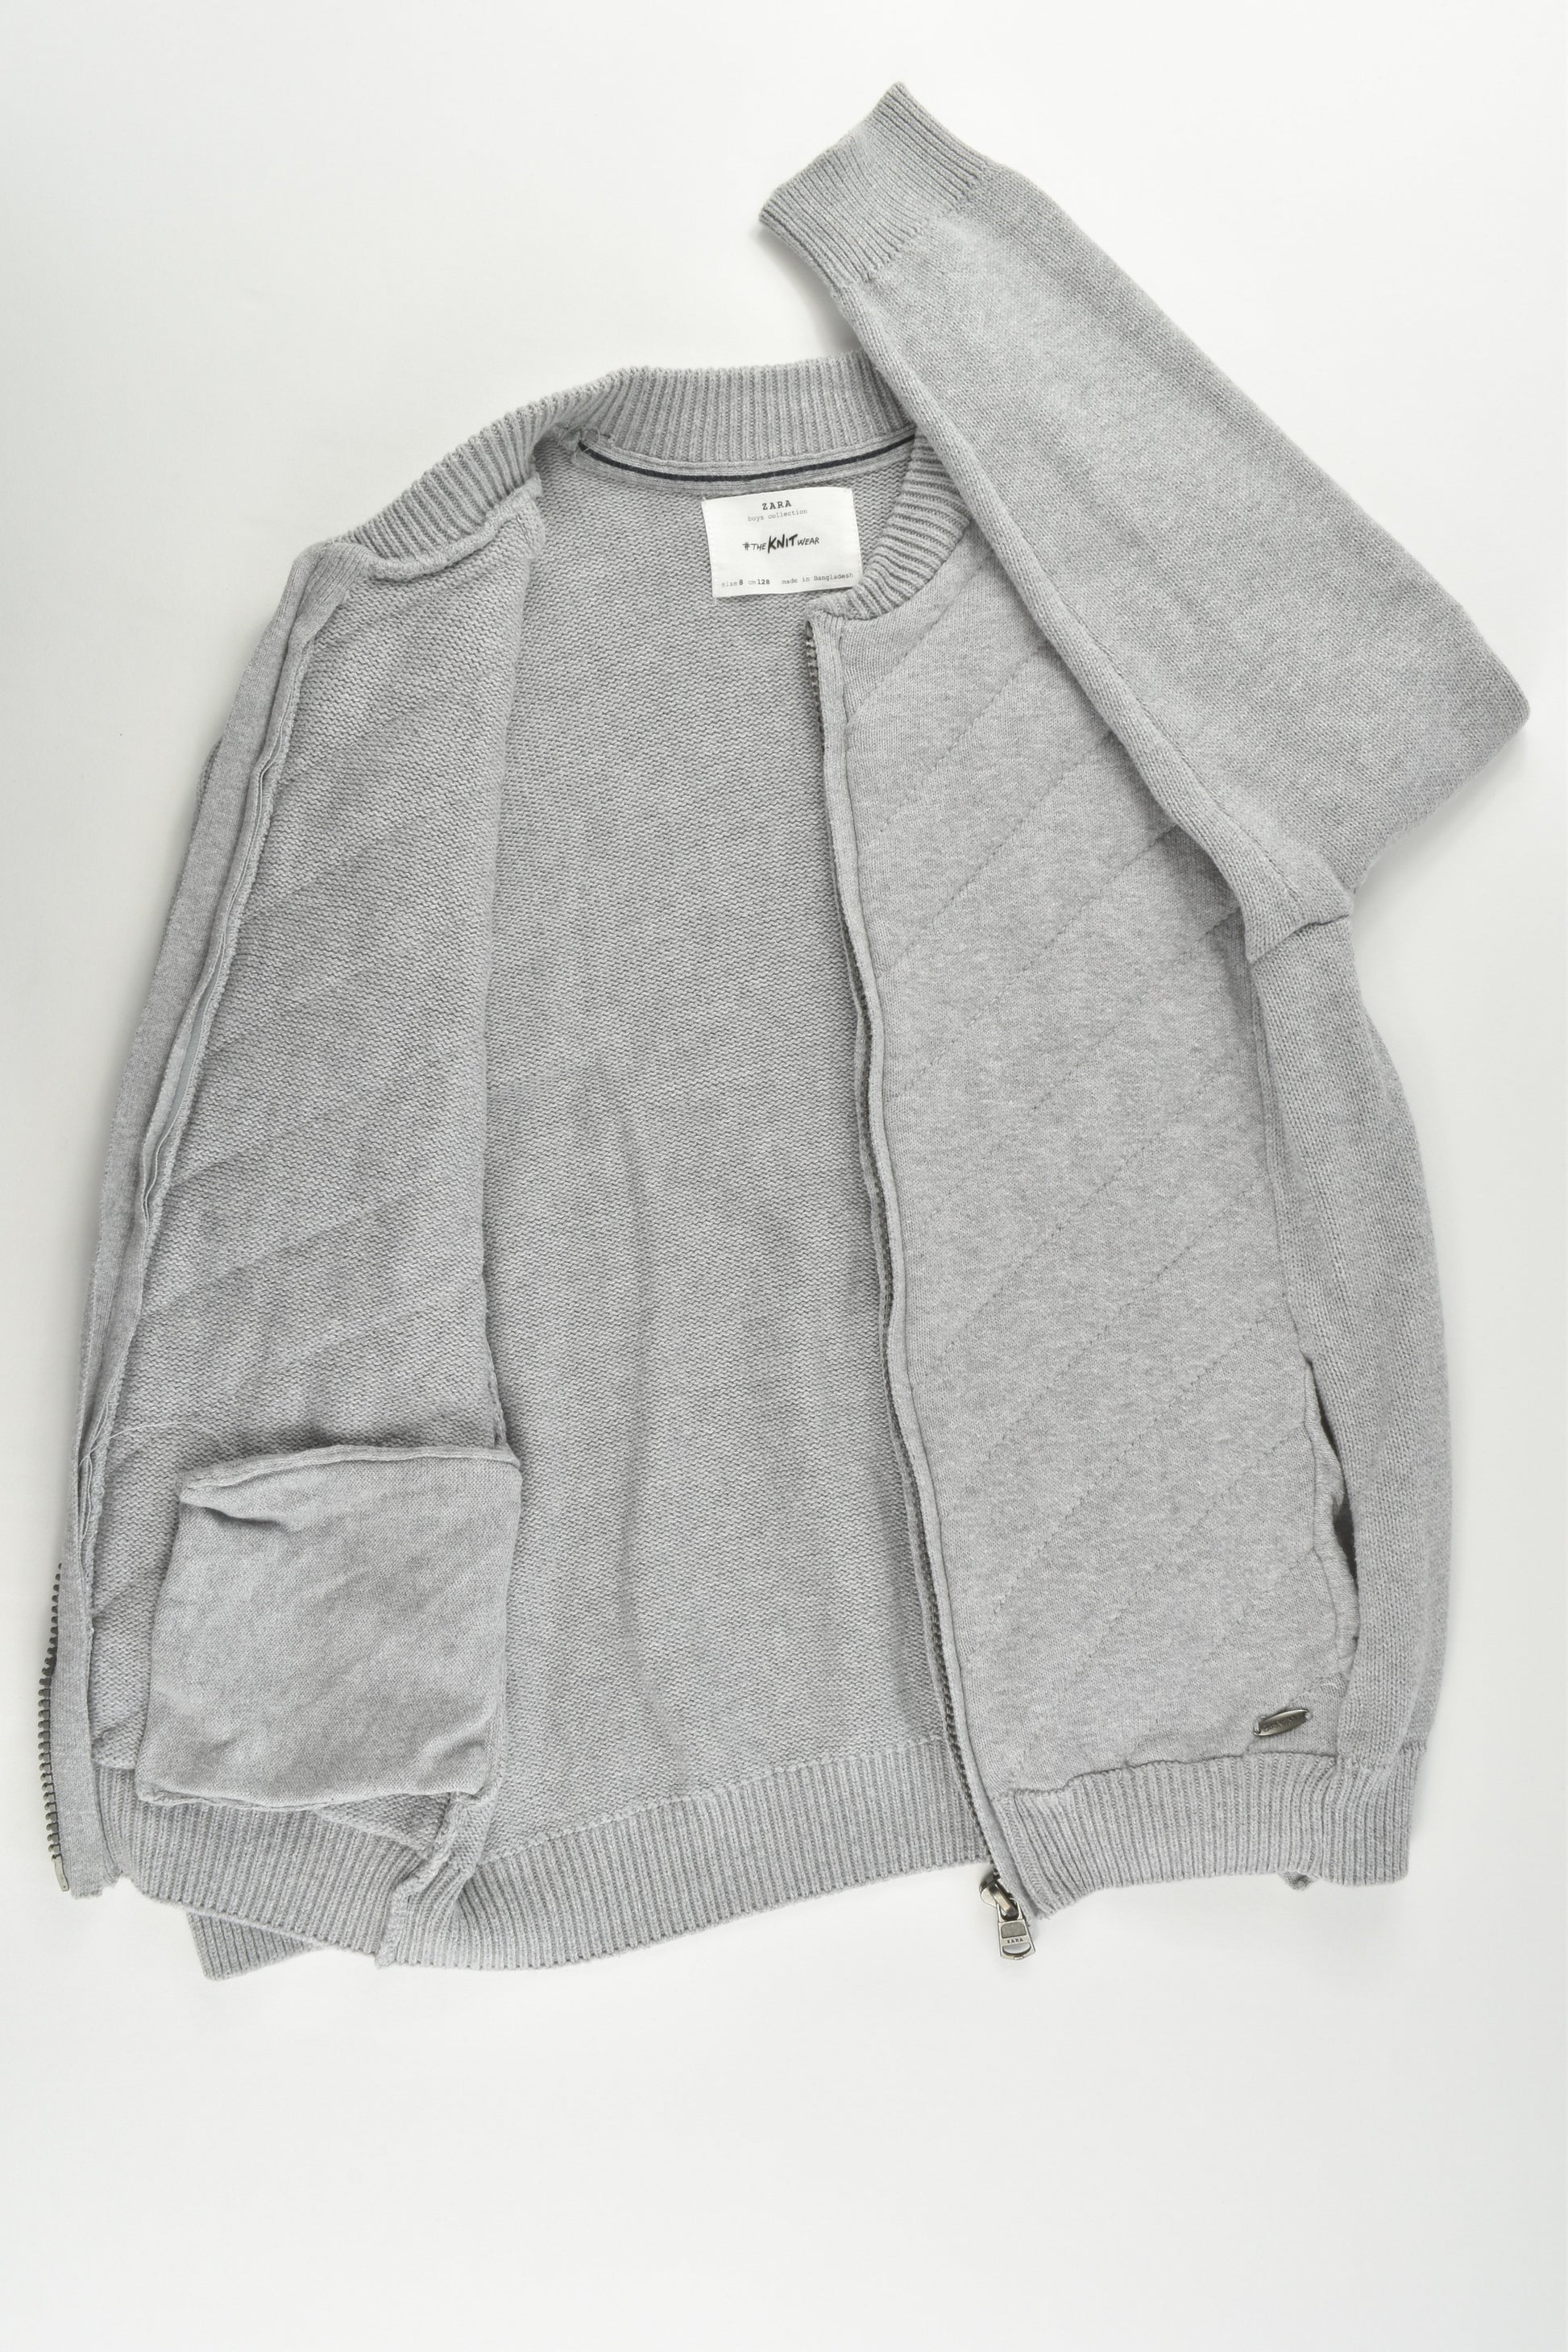 Zara Size 8 (128 cm) Grey Knitted Jumper